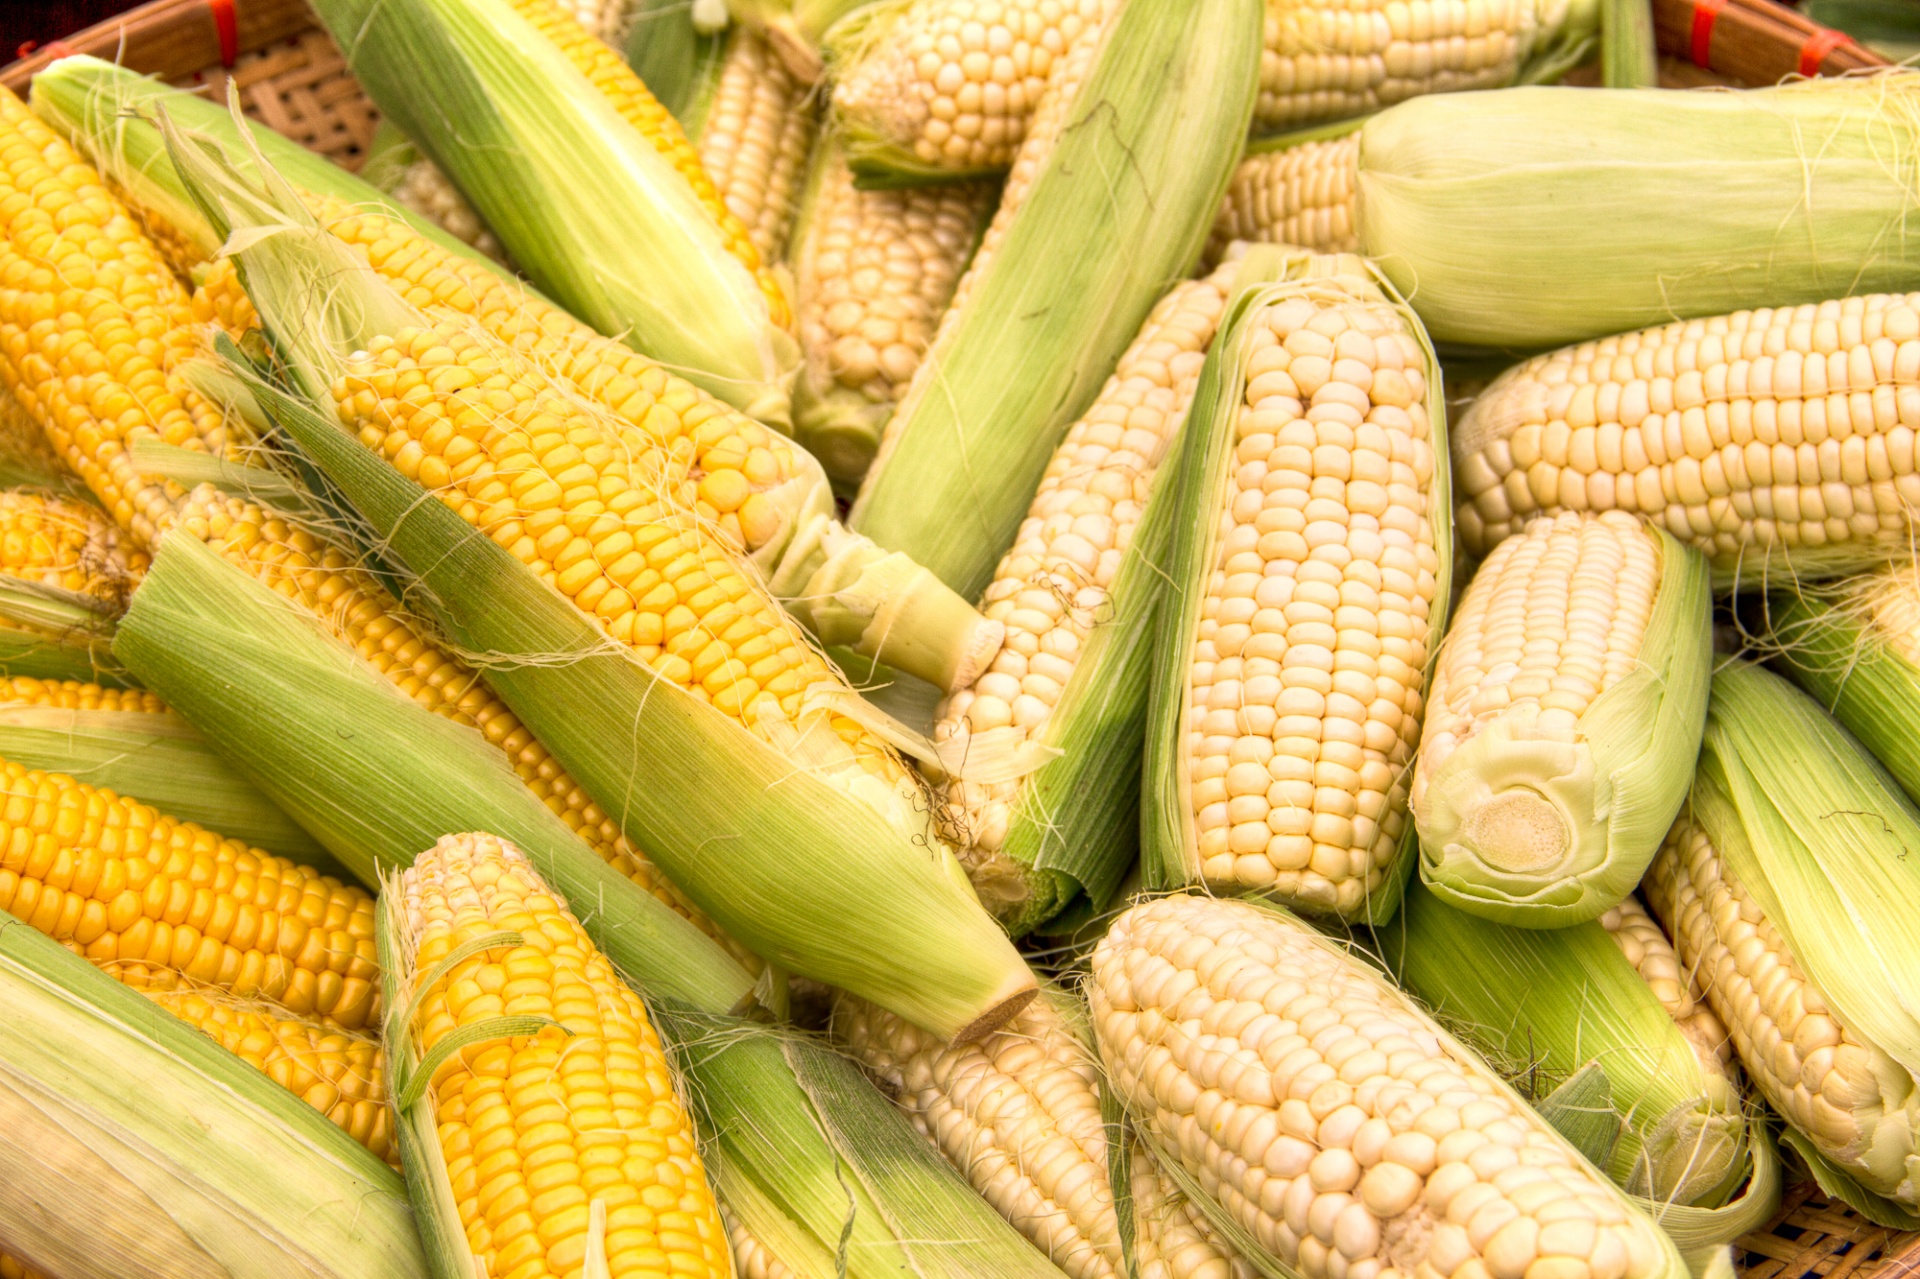 Farmer's market selection of corn on the cob